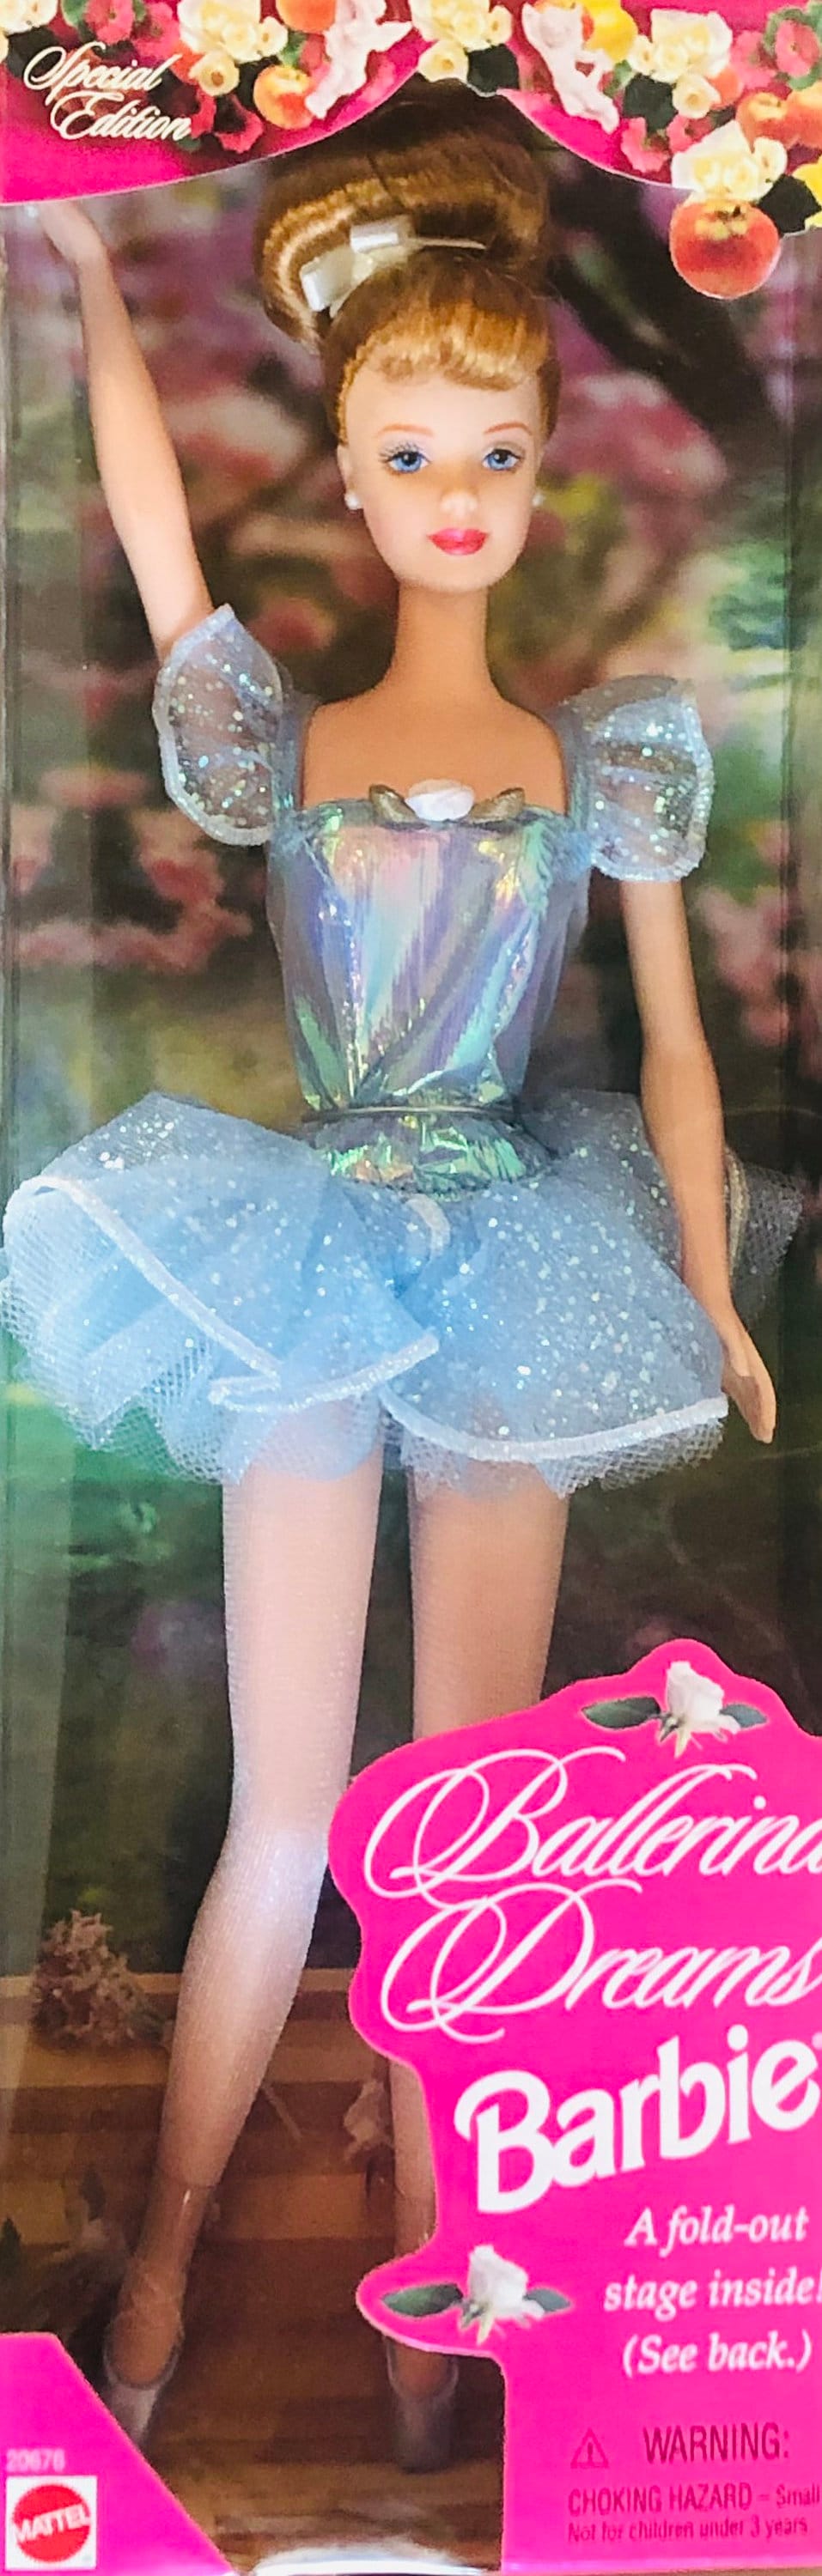 Ballerina Dreams Barbie Doll Special Edition 20676 New NRFB 1998 Mattel 